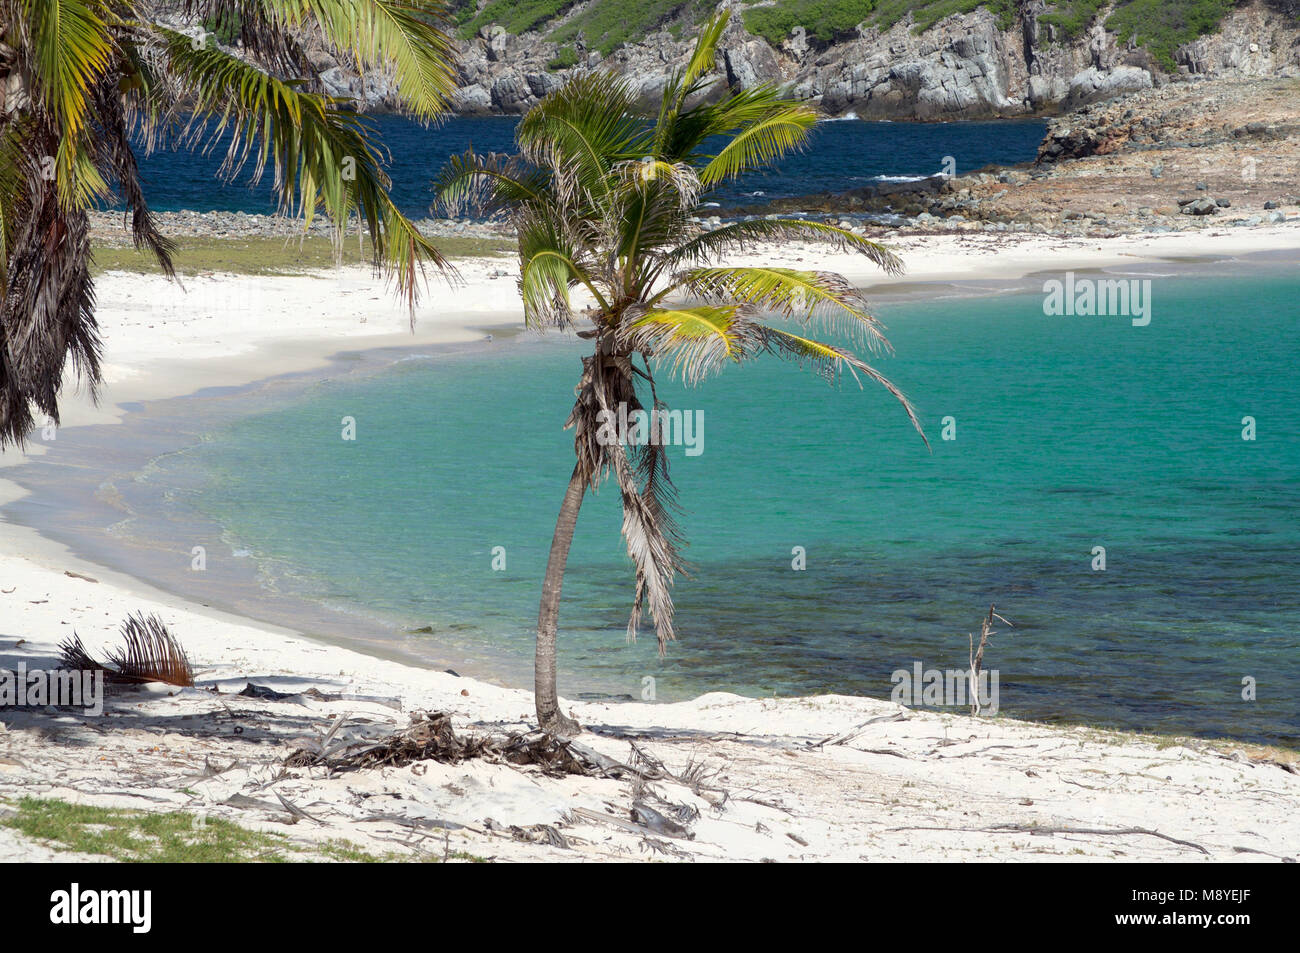 Wunderschöne Karibische Inseln, Inselgruppe Los Testigos, Mar Caribe, Venezuela Stockfoto